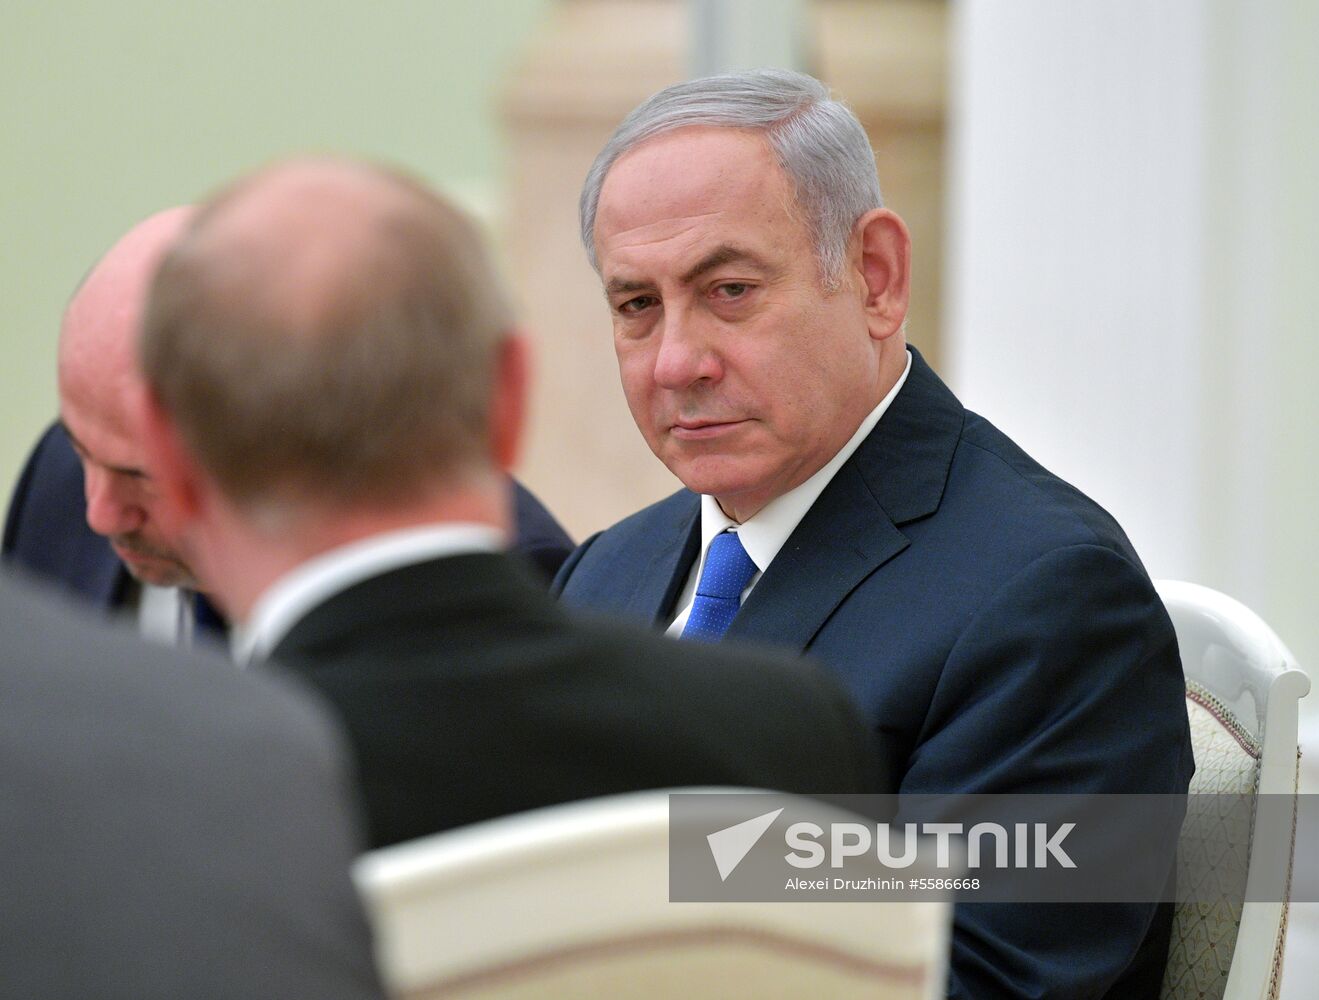 Russian President Vladimir Putin meets with Israeli Prime Minister Benjamin Netanyahu